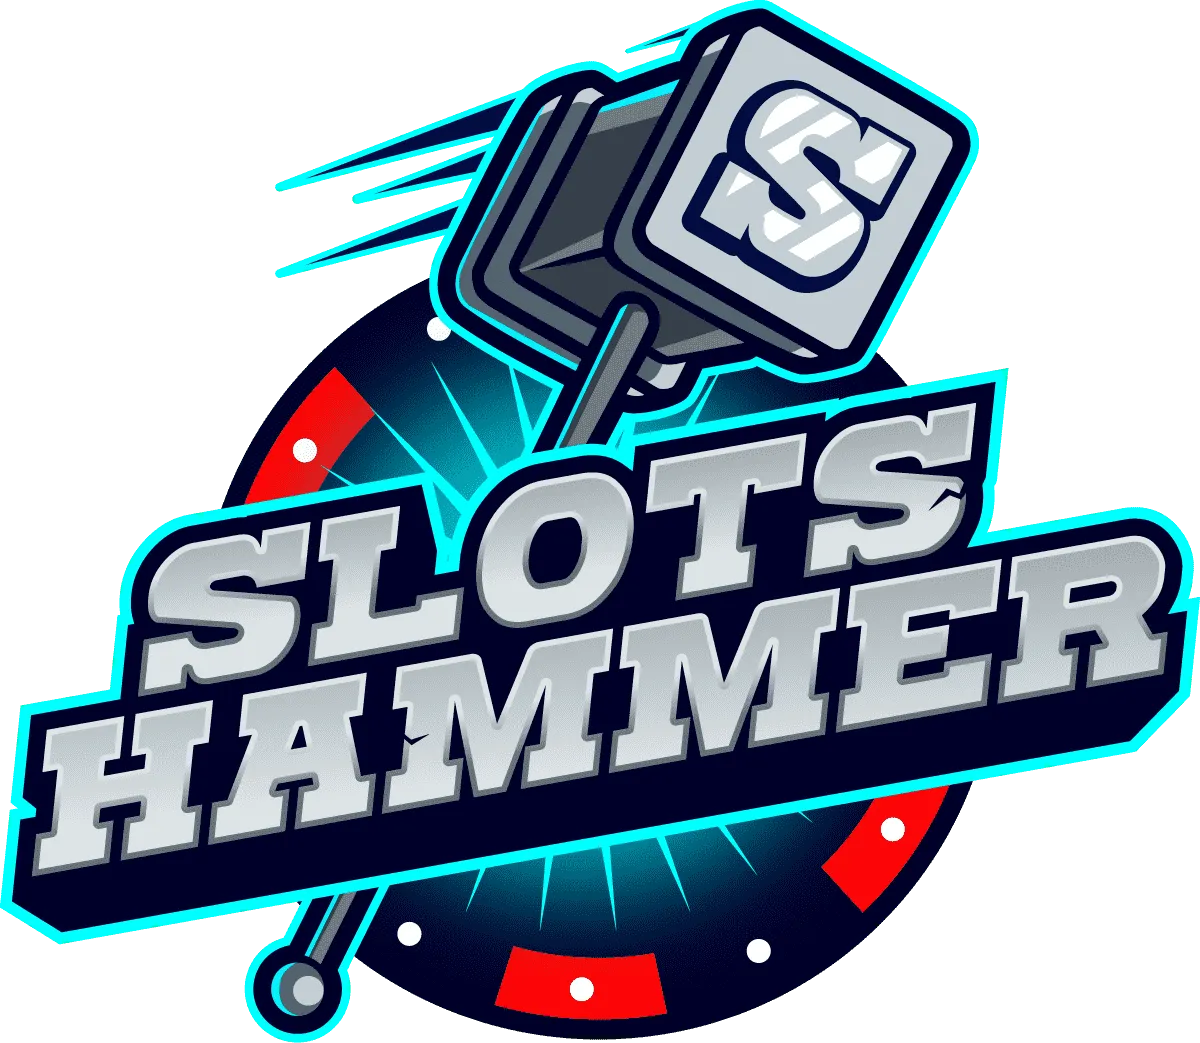 Slots Hammer Casino Bonus: Wochenend 10% Cashback-Aktion
